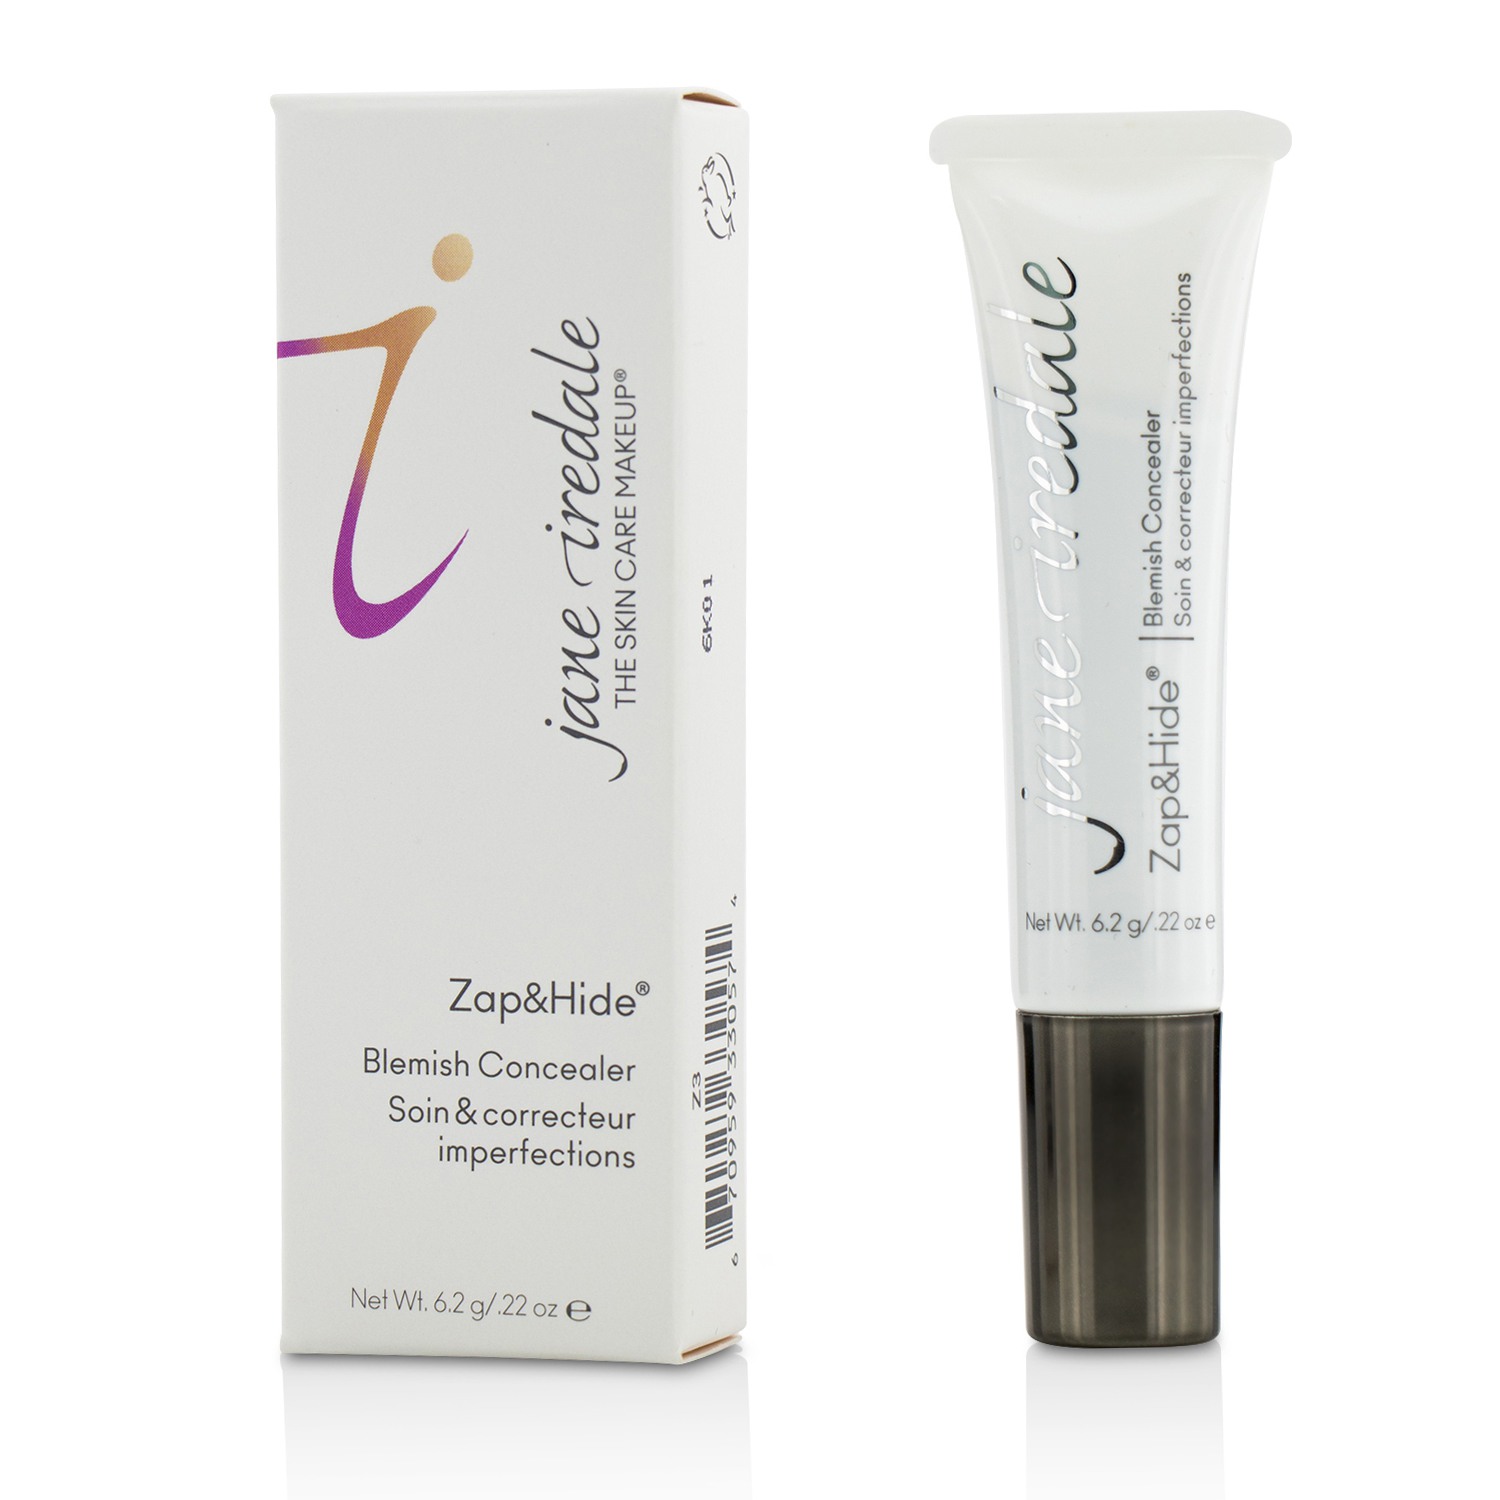 Zap&Hide Blemish Concealer (New Packaging) - Z3 Jane Iredale Image